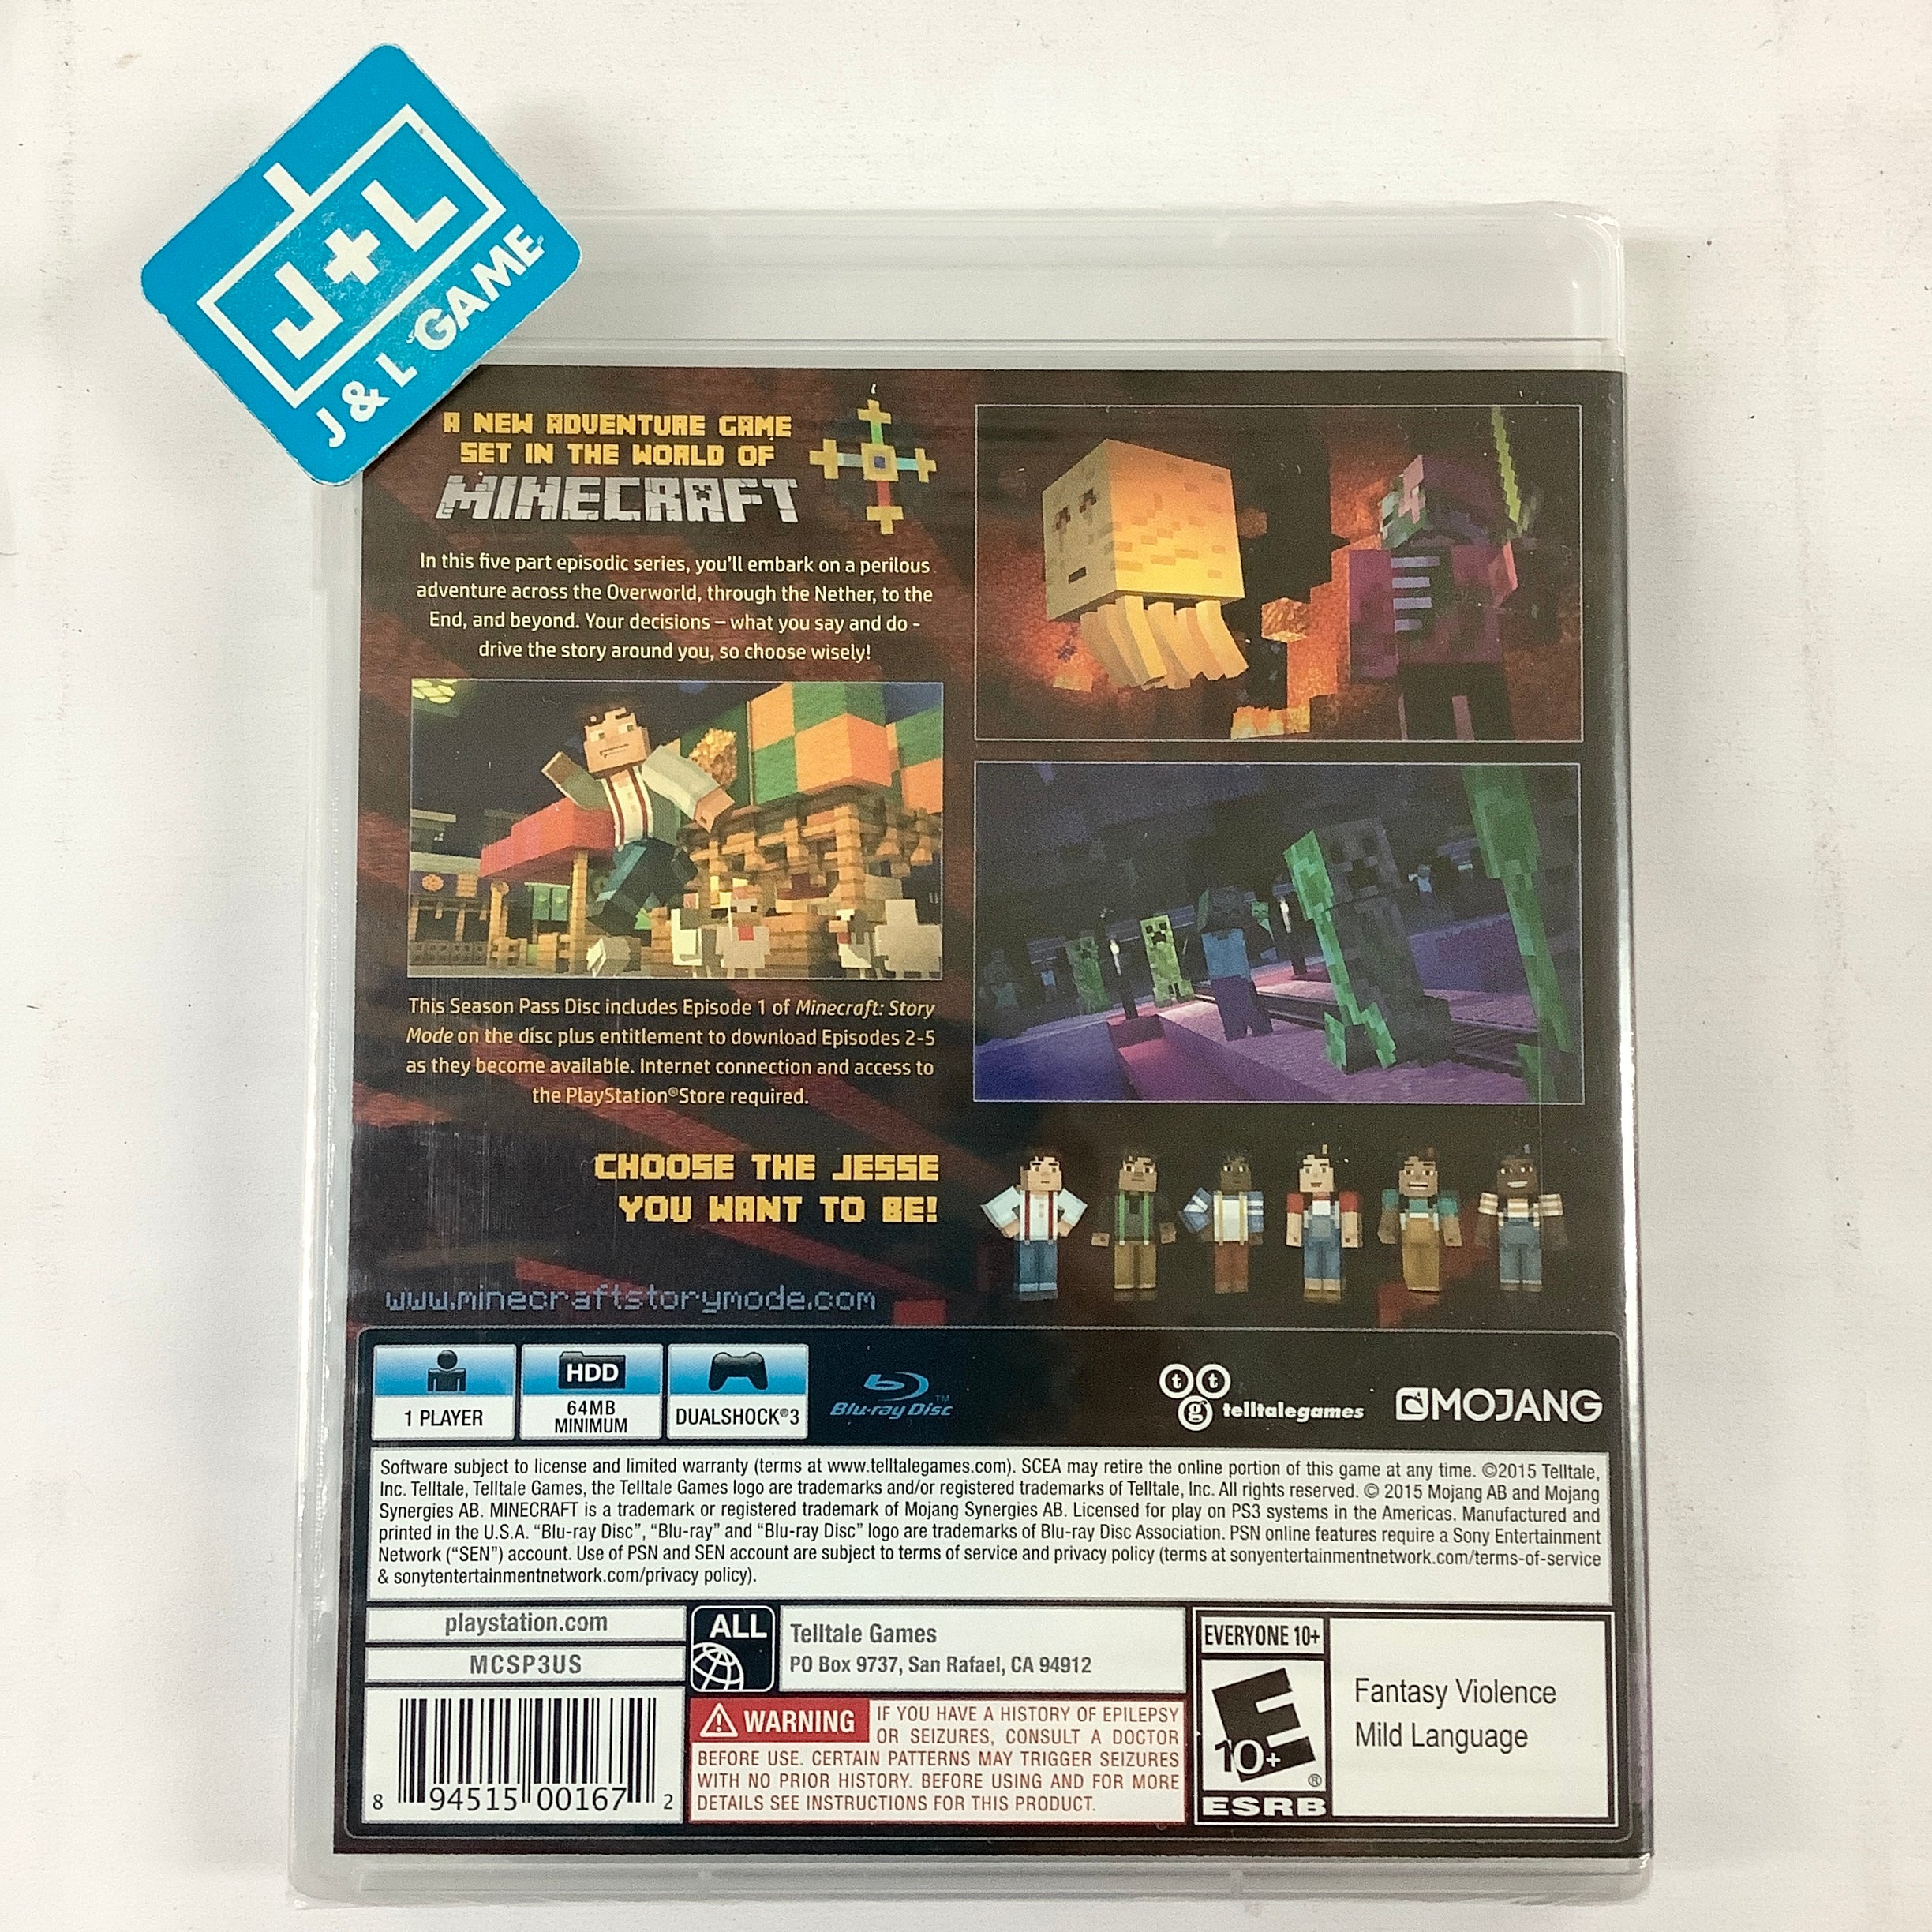 Minecraft: Story Mode - A Telltale Games Series - Season Pass Disc - (PS3) PlayStation 3 Video Games Telltale Games   